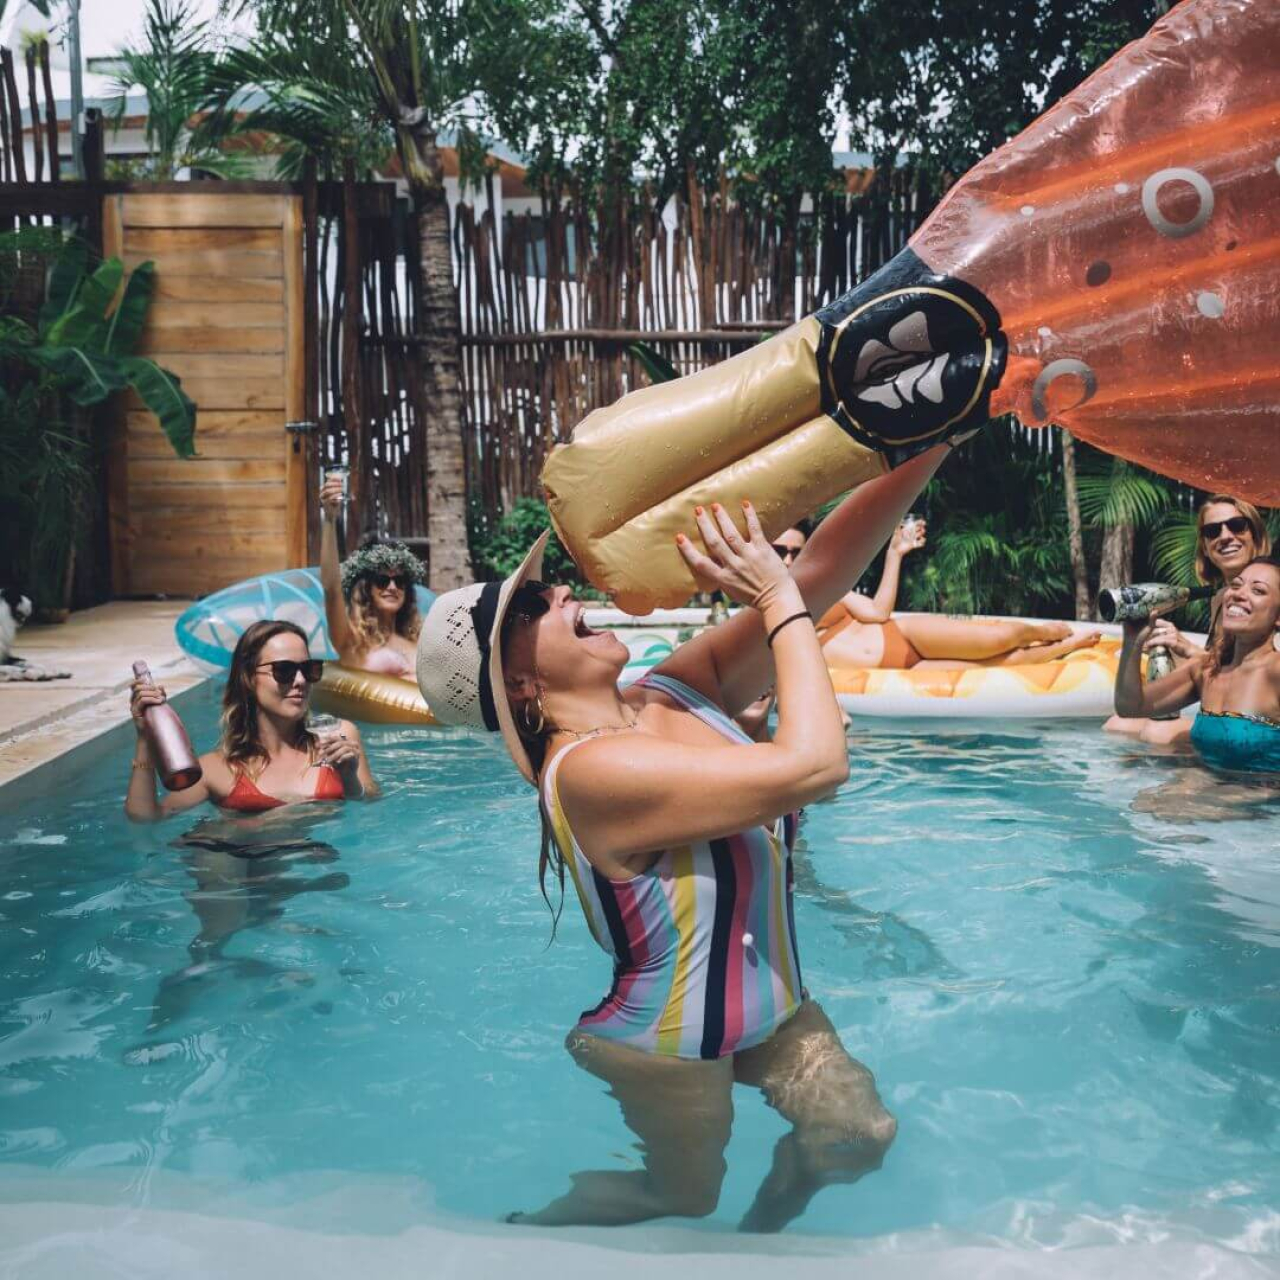 Women having a pool party